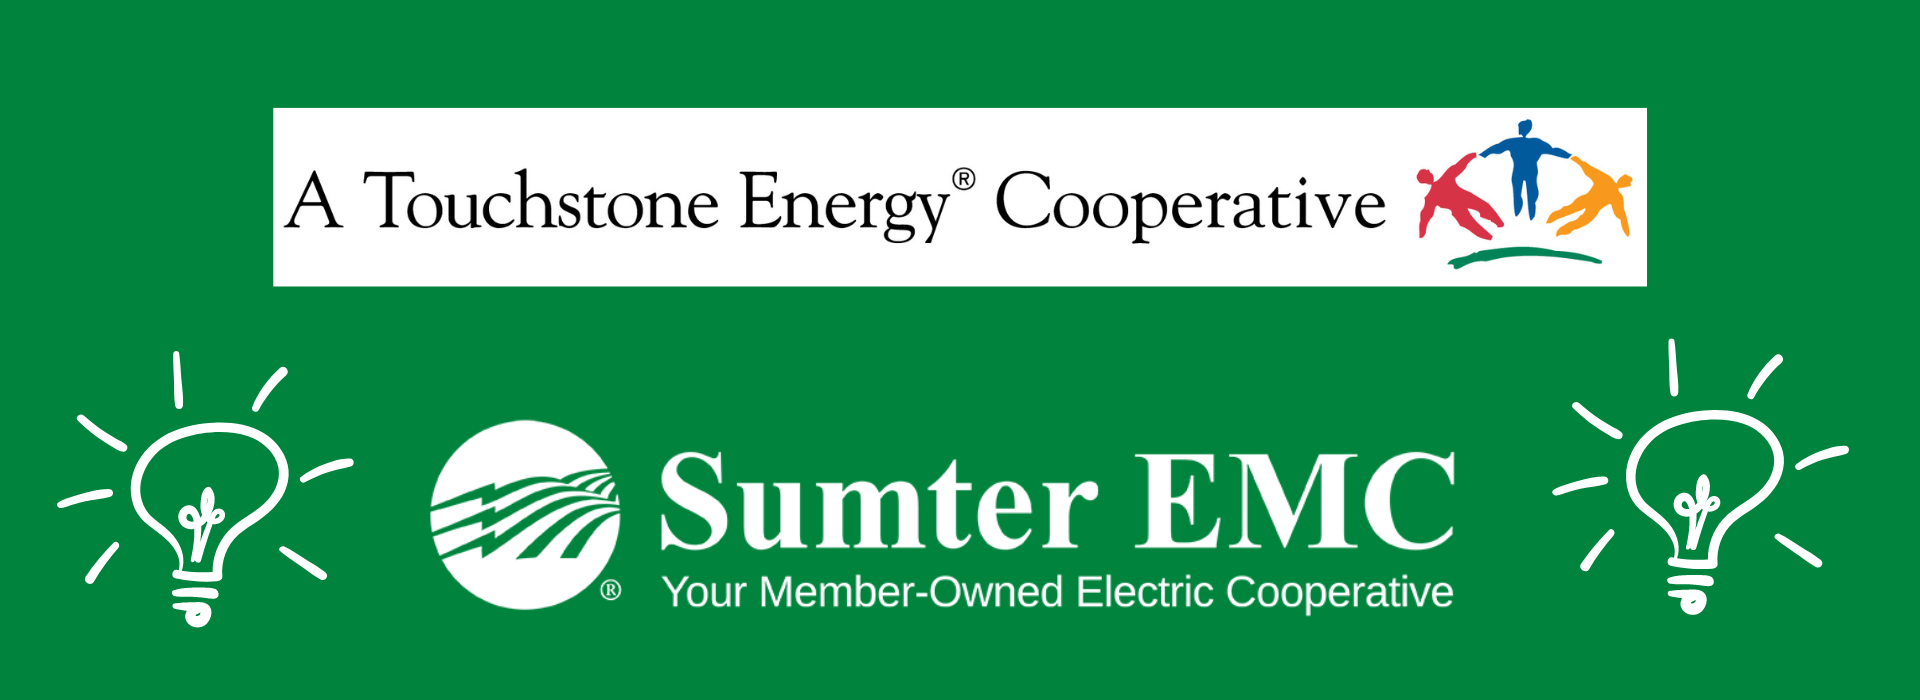 Touchstone Energy Cooperatives Sumter EMC